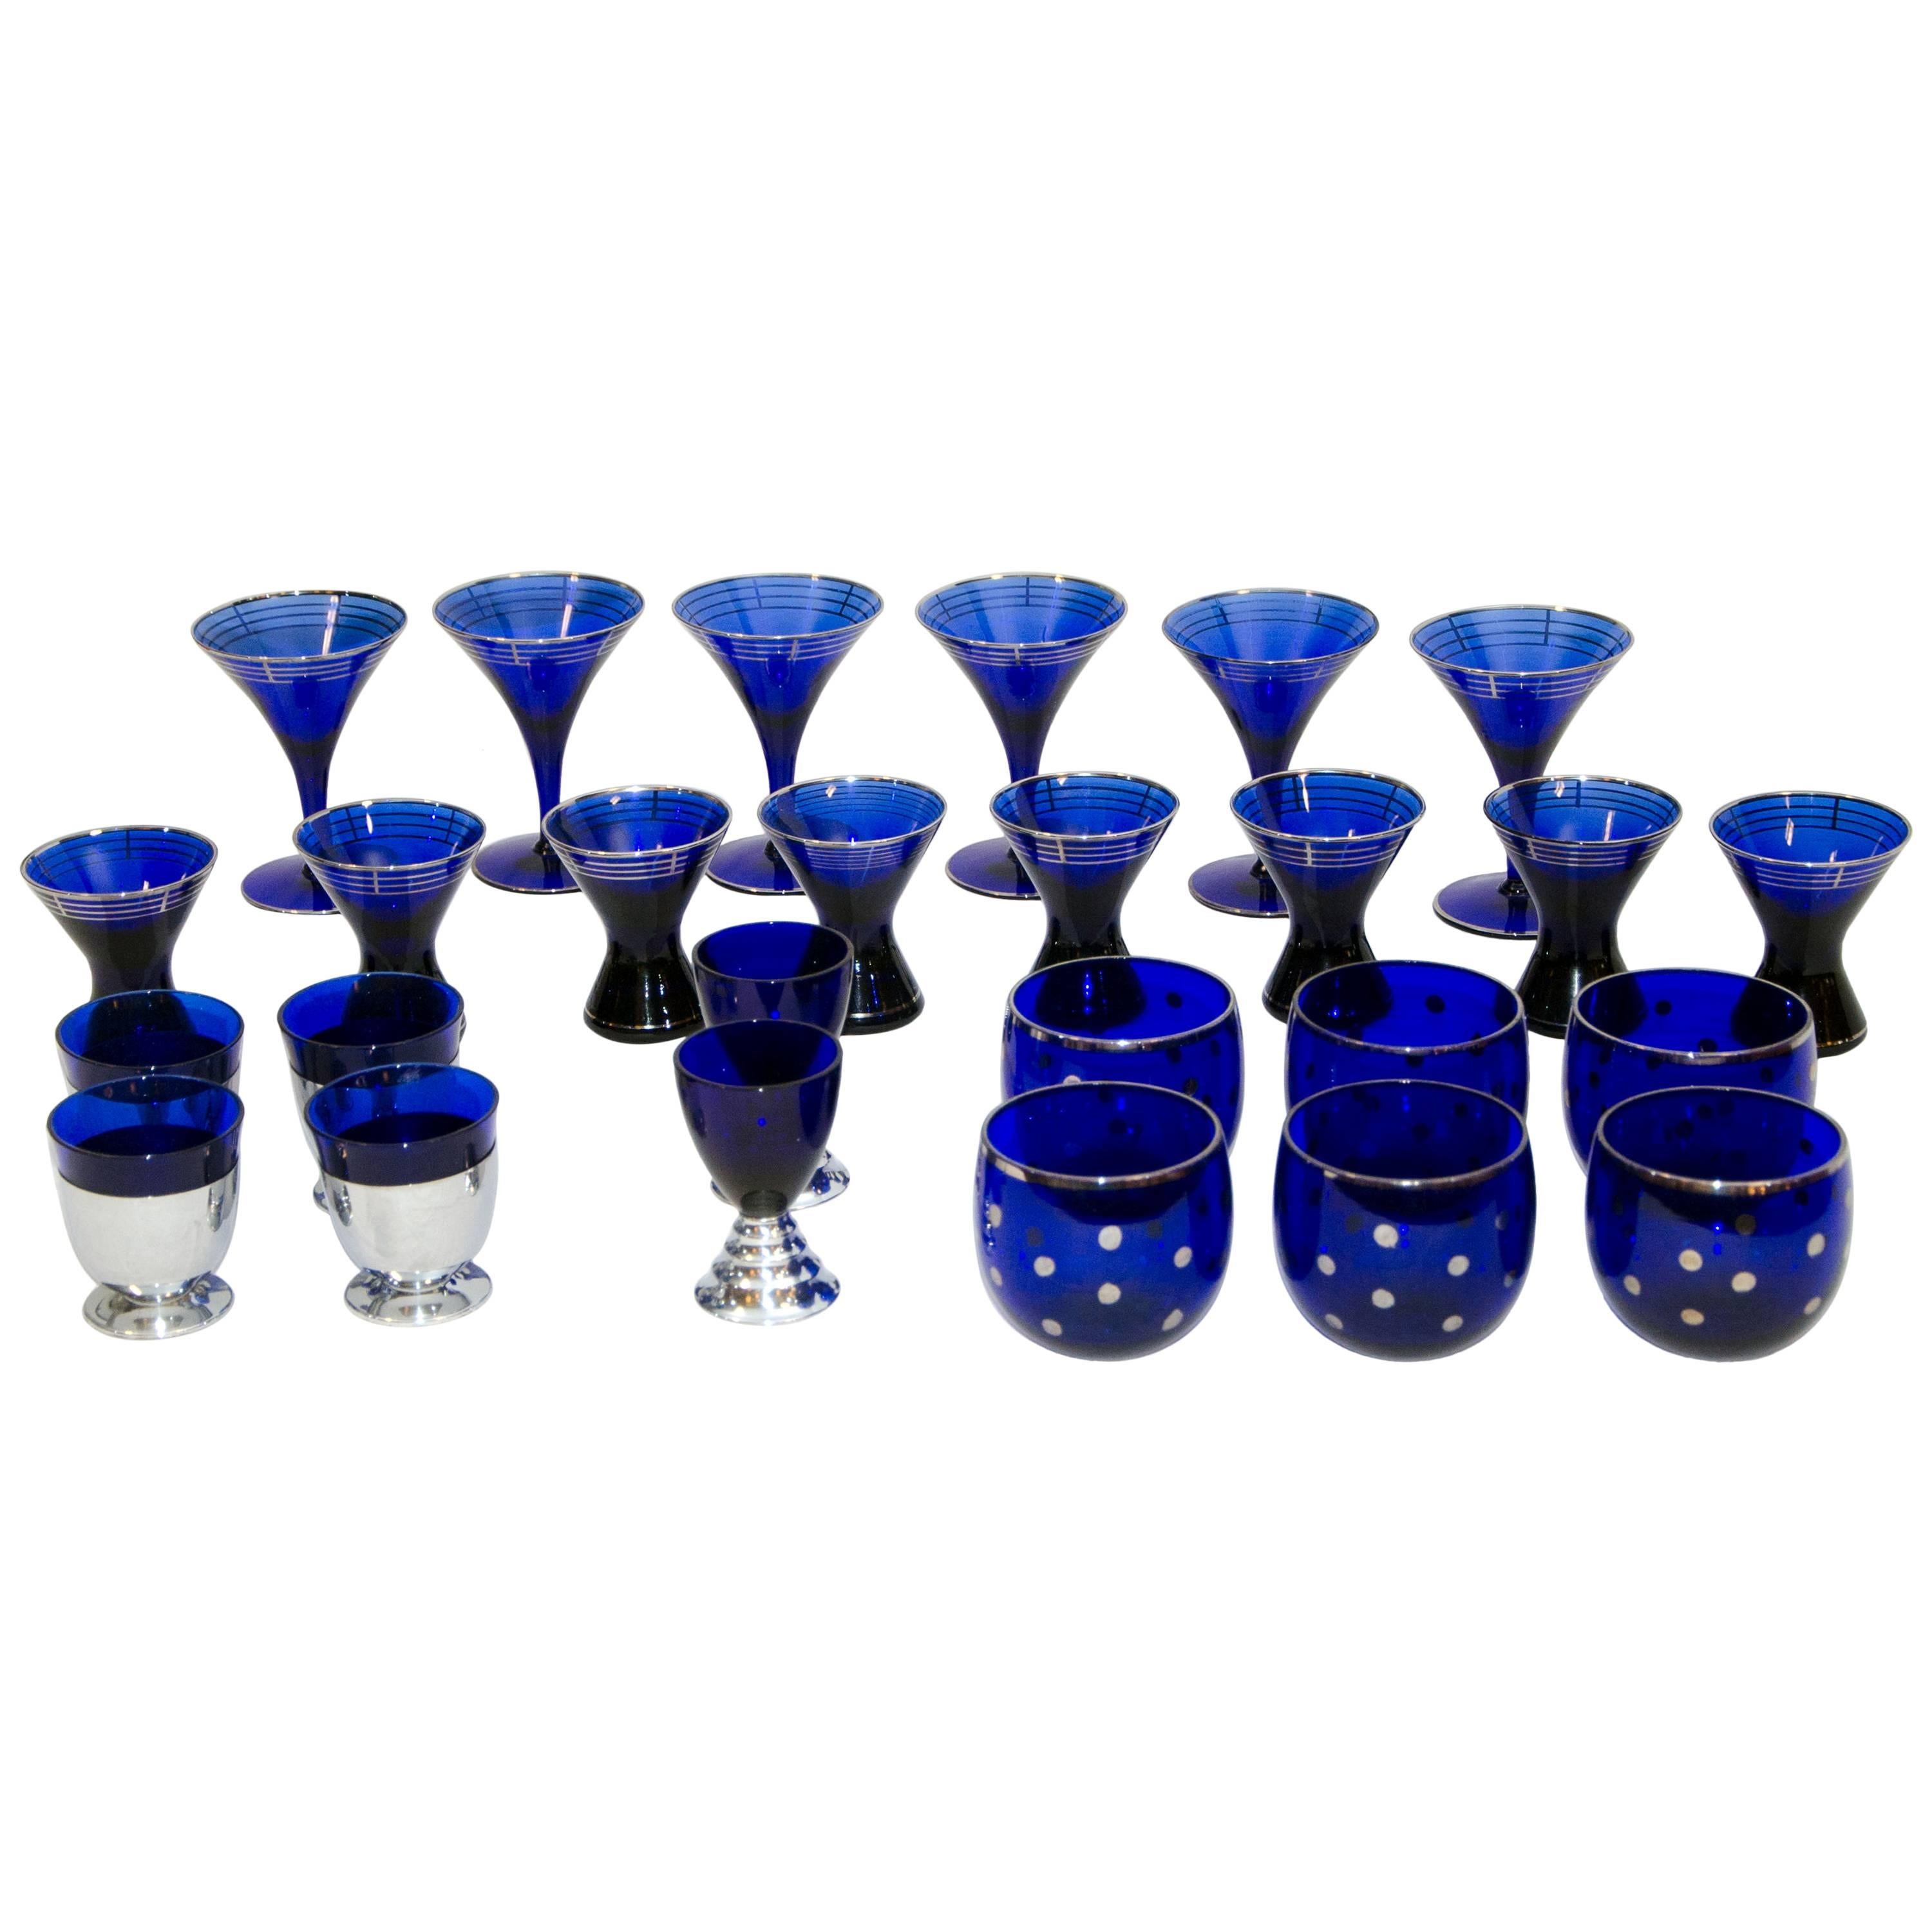 Collection of Art Deco Cobalt Blue Cocktail or Bar Glassware